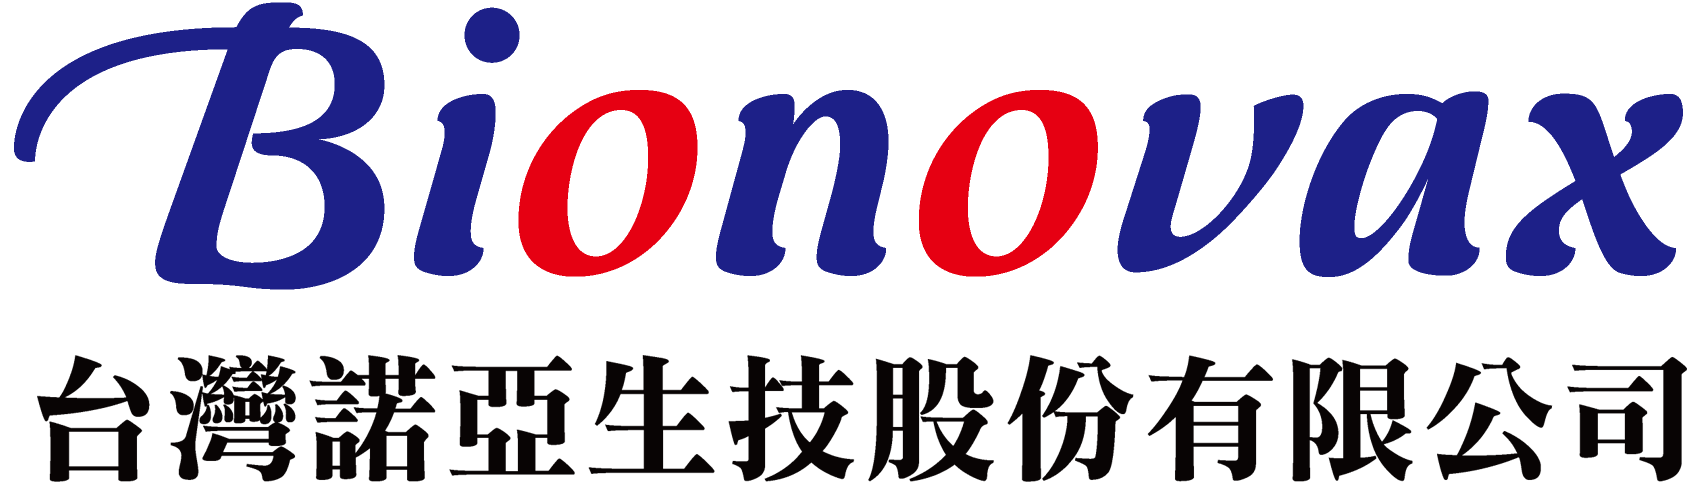 Bionovax 台灣諾亞生技股份有限公司